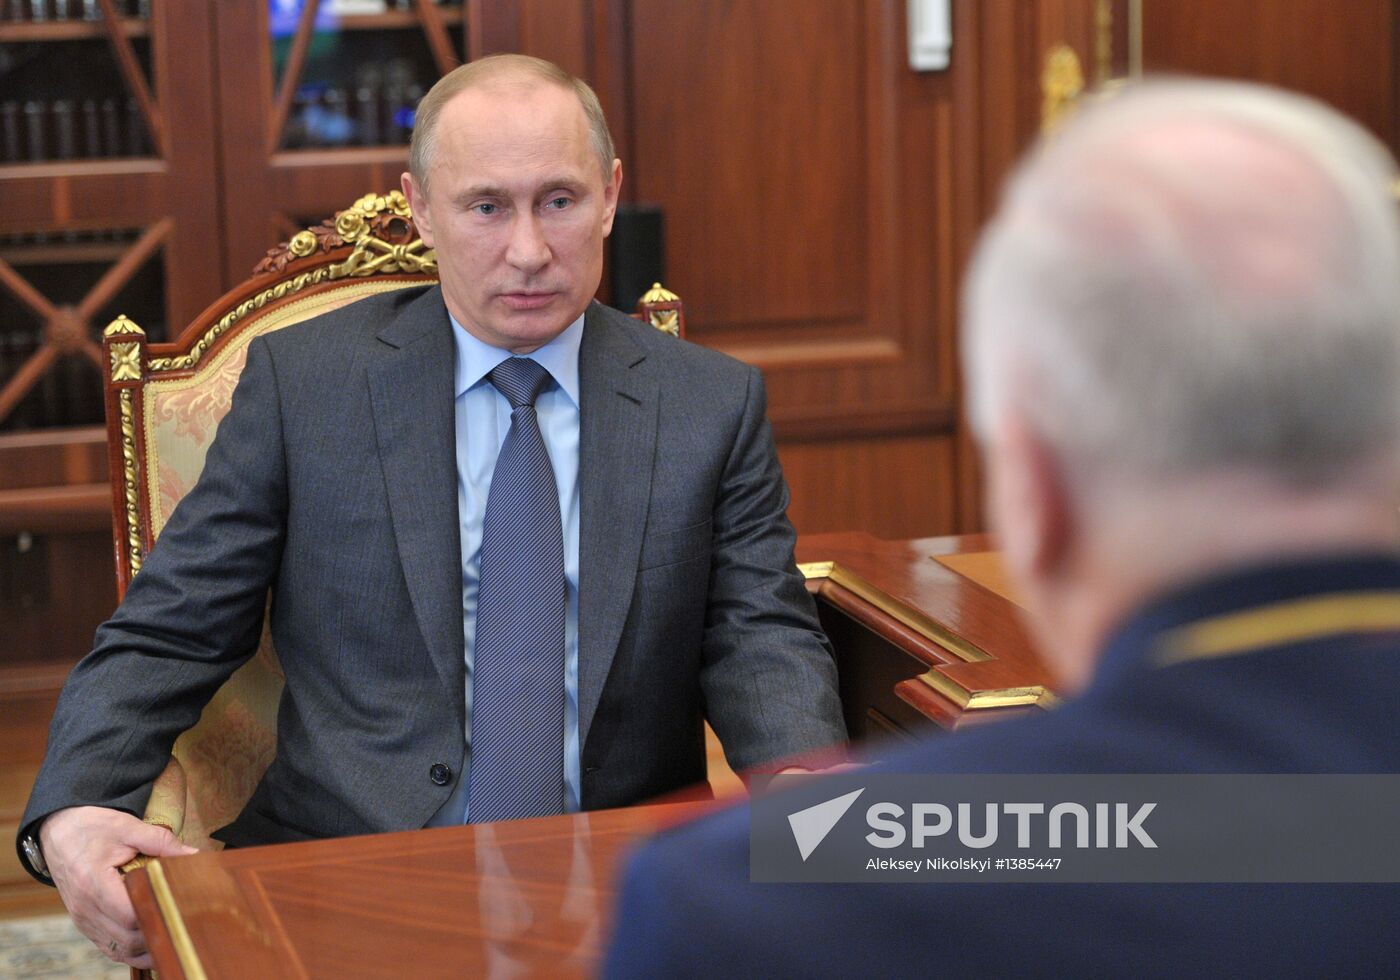 Vladimir Putin meets with Alexander Bastrykin